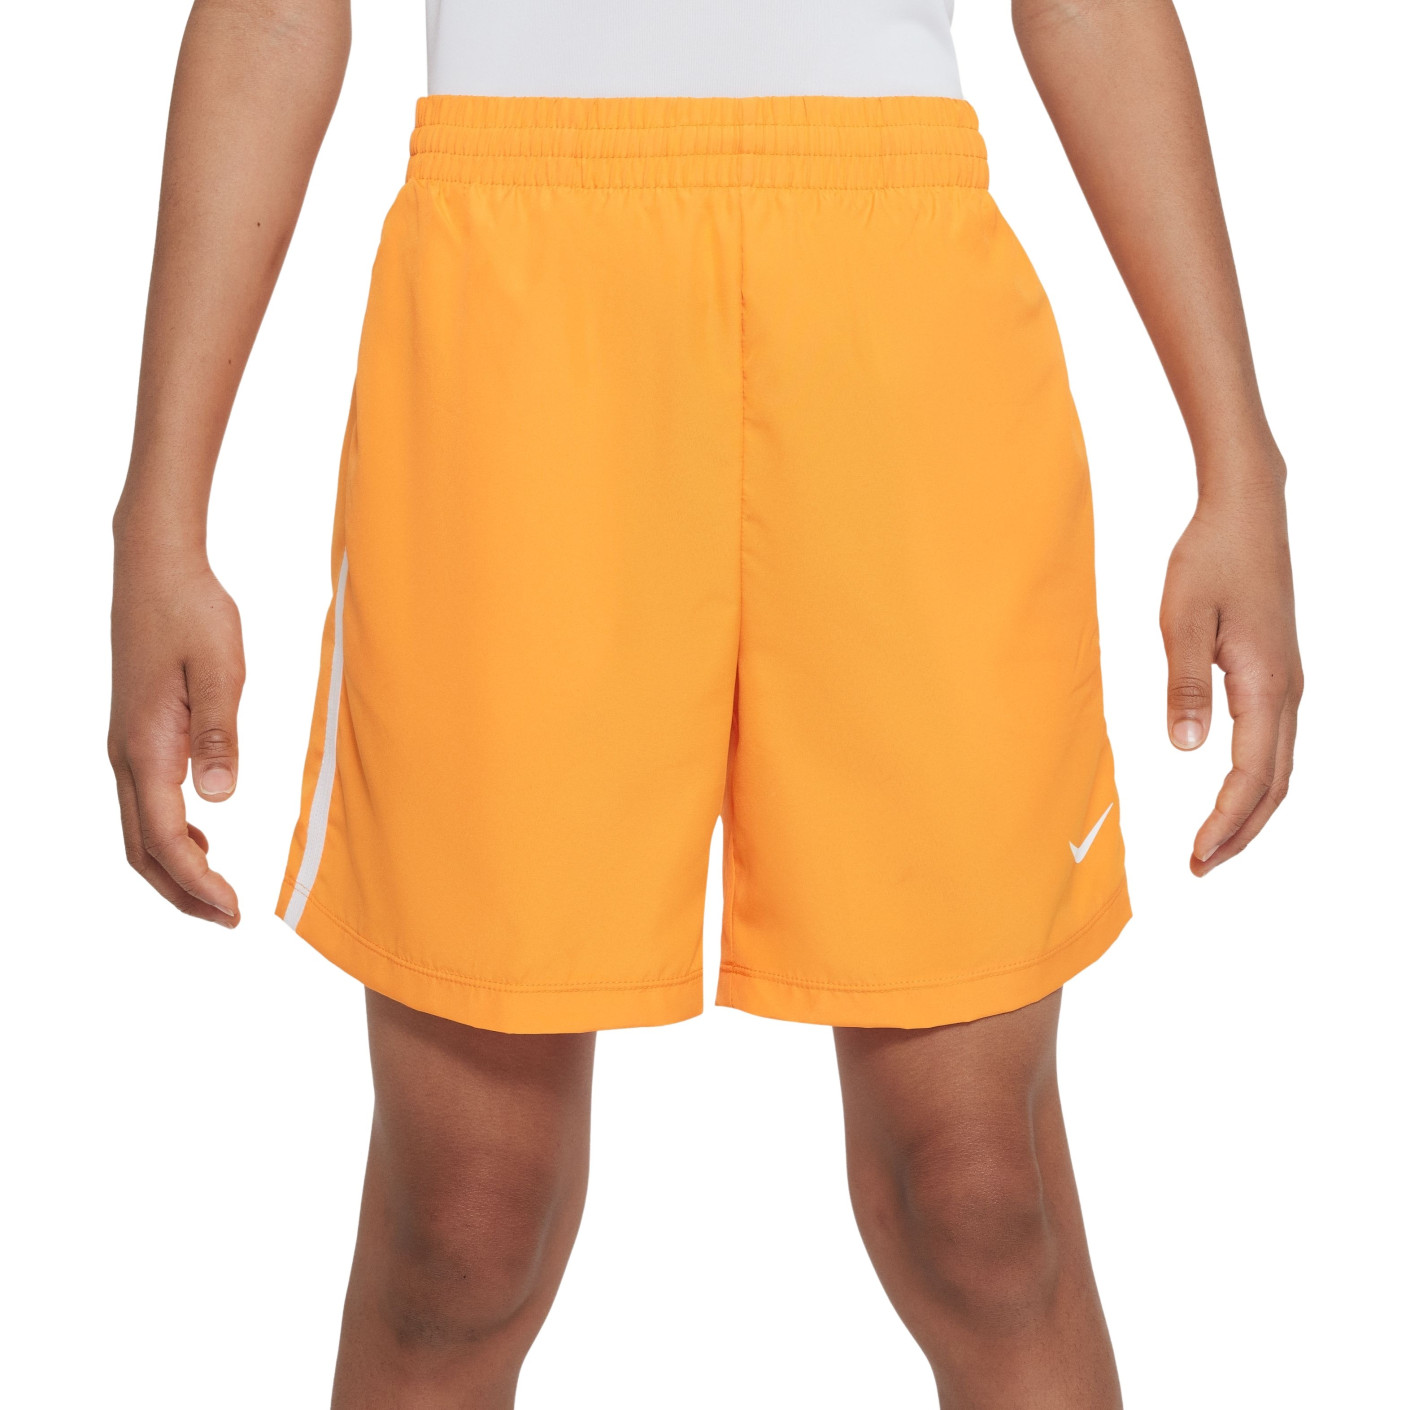 Nike Multi Woven Short Enfants Orange Blanc